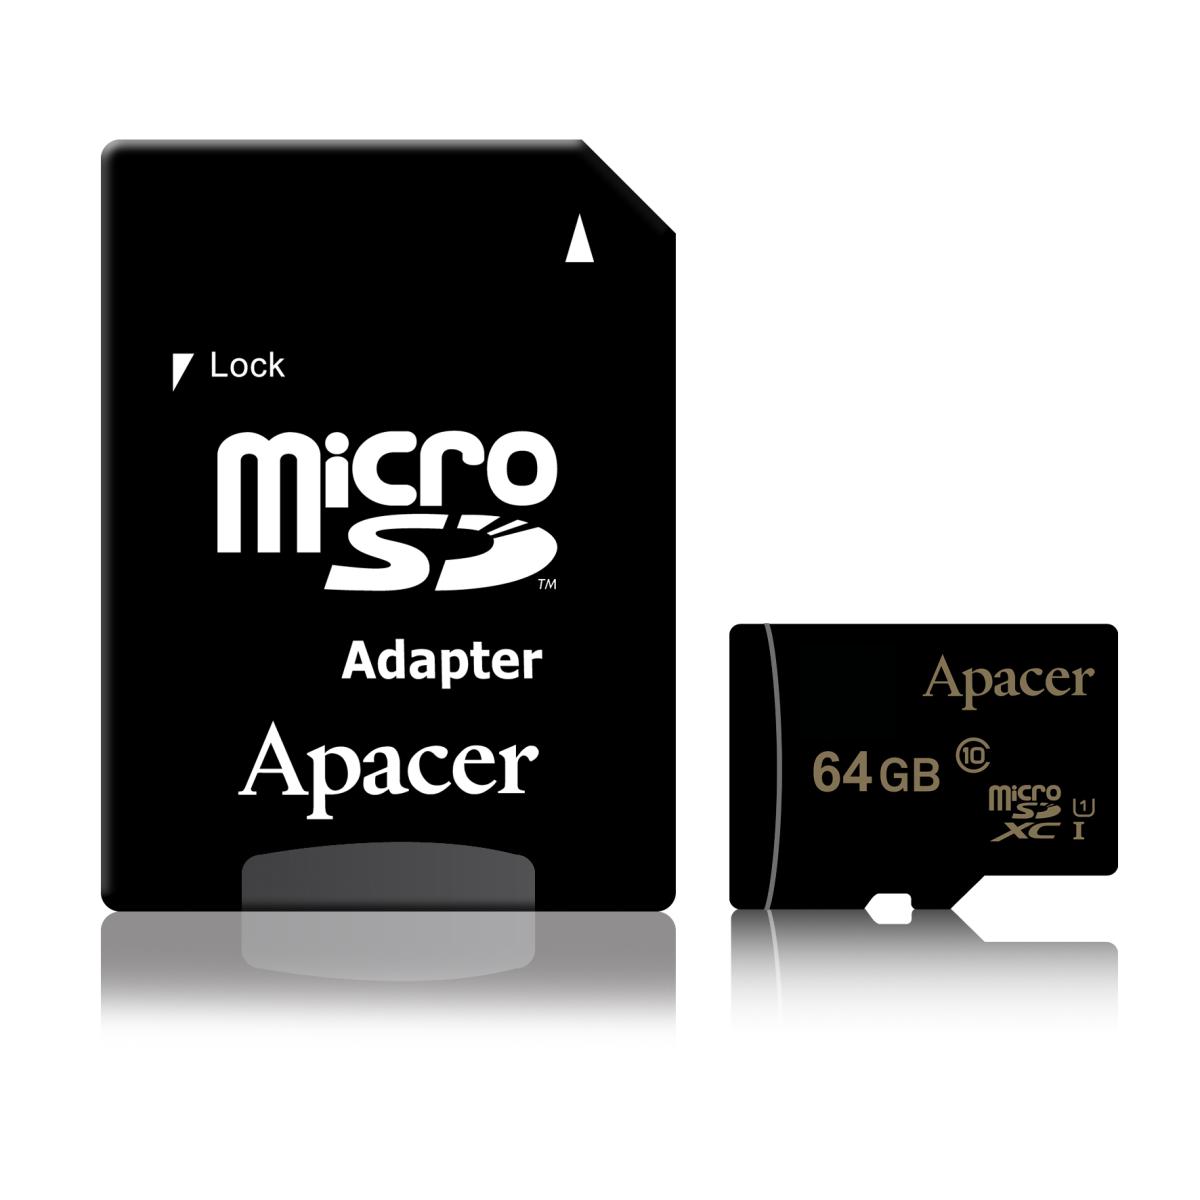 Apacer microSDXC/SDHC UHS-I U1 Class 10 64GB